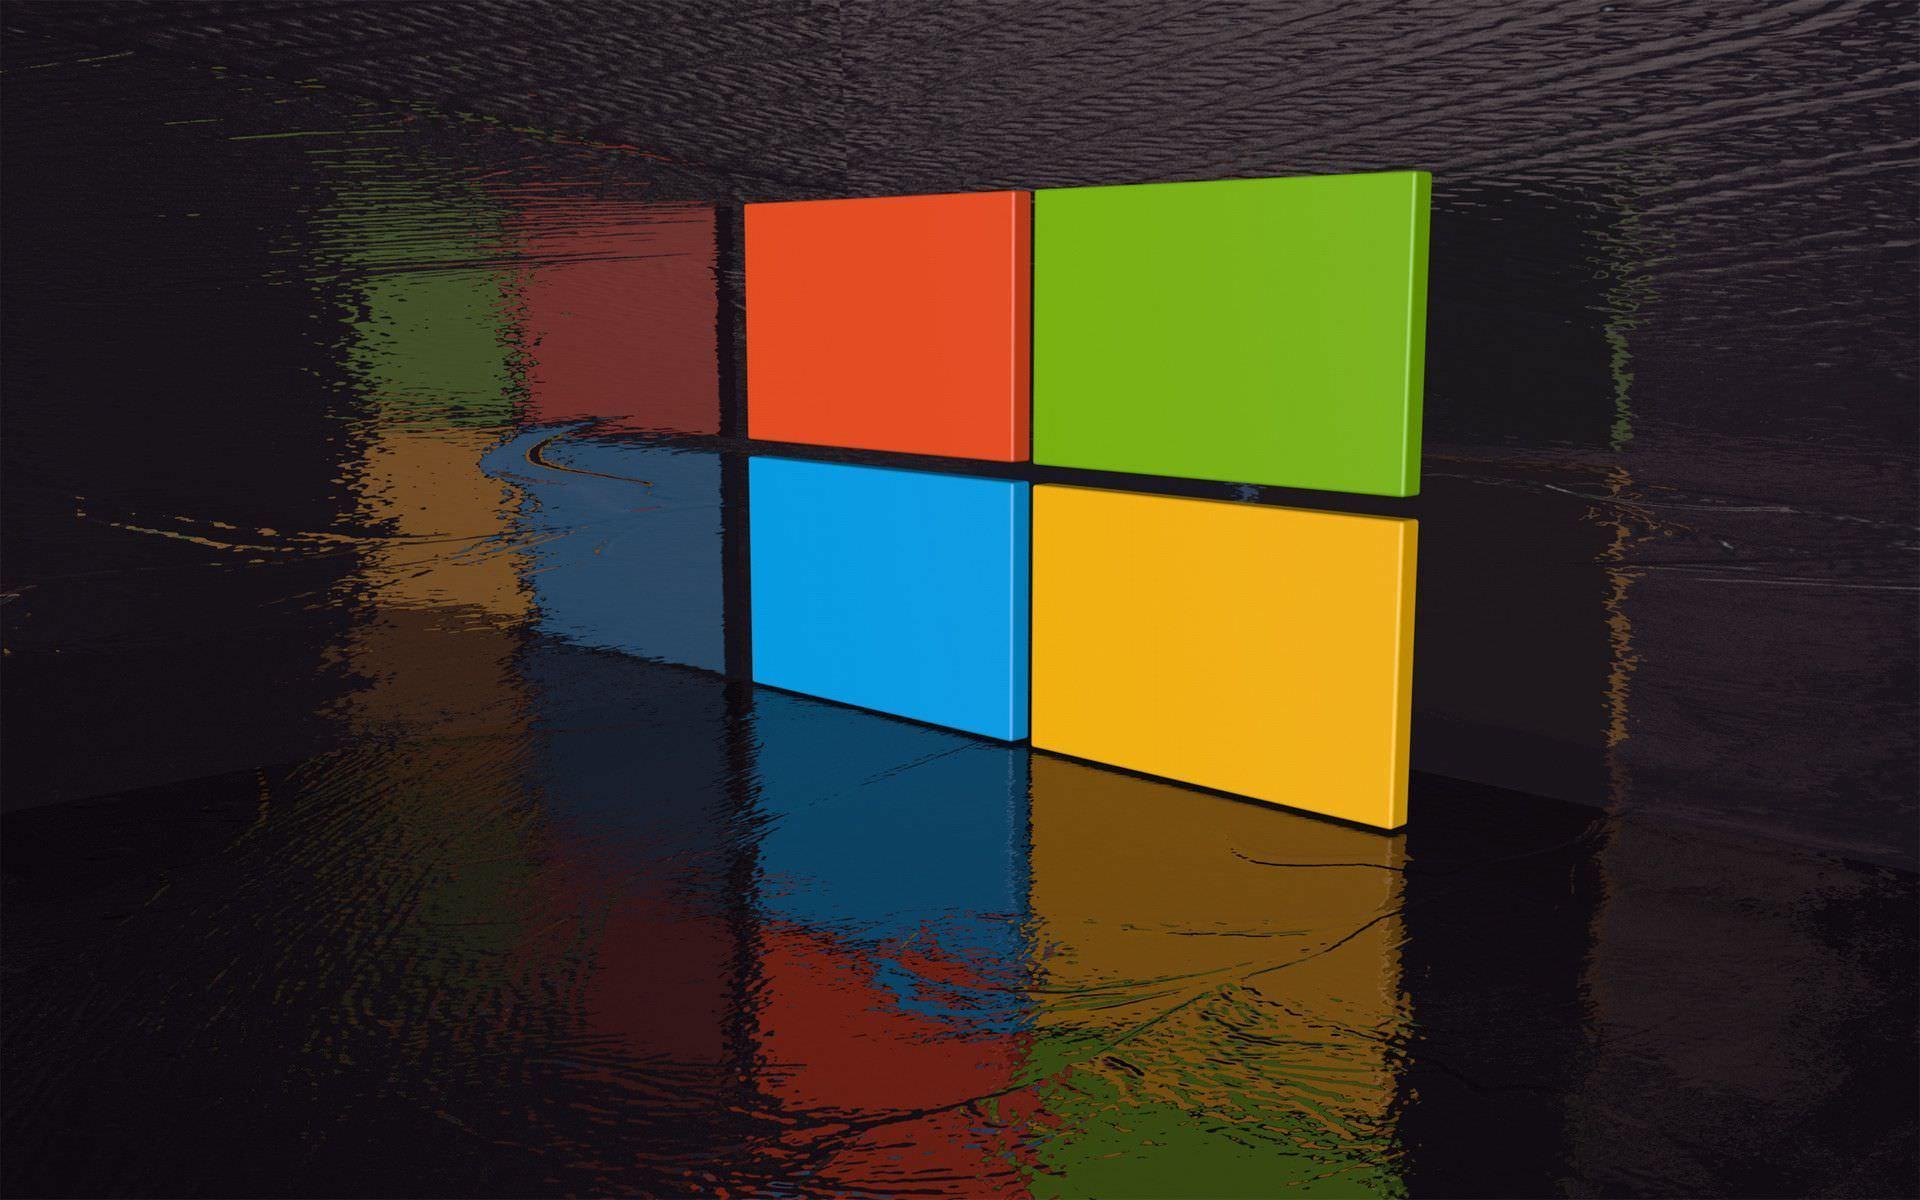 Simple Window 8 Logo - 3D Windows 8 Wallpaper, Image, Background, Picture. Design